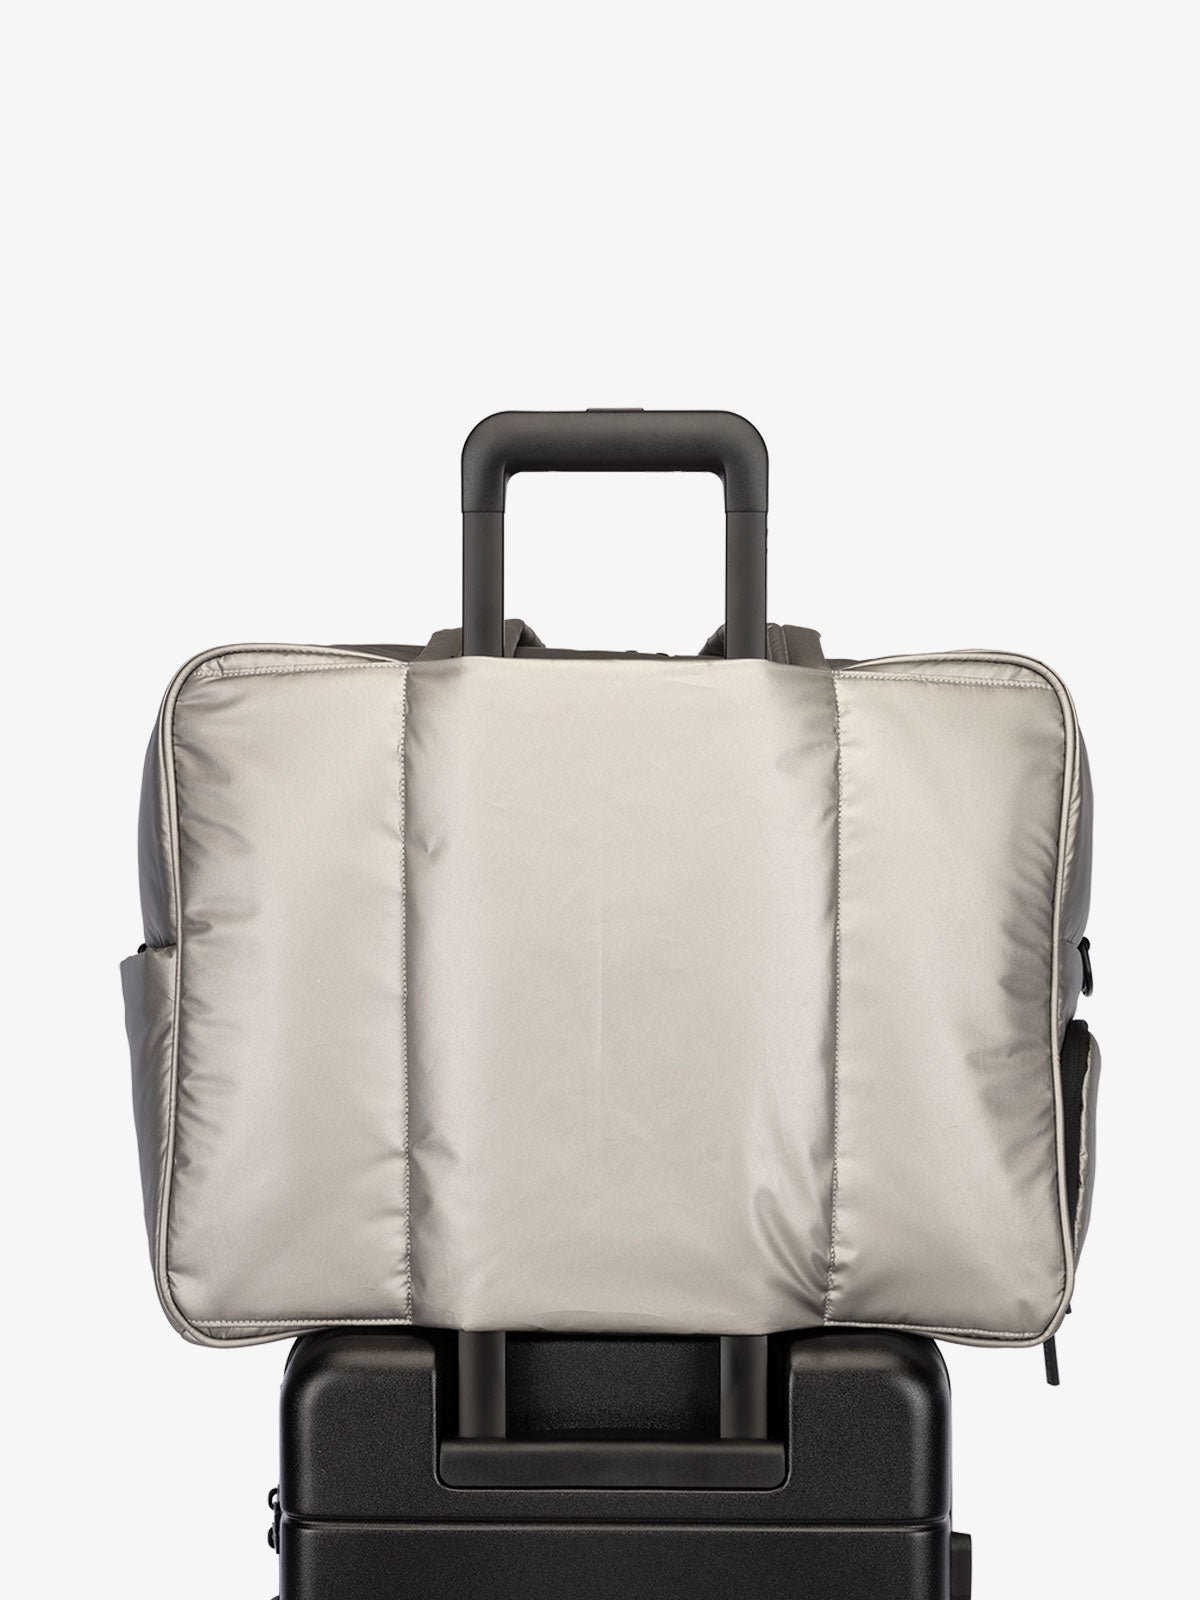 CALPAK Luka large travel duffel bag with trolley sleeve for luggage in shiny gunmetal